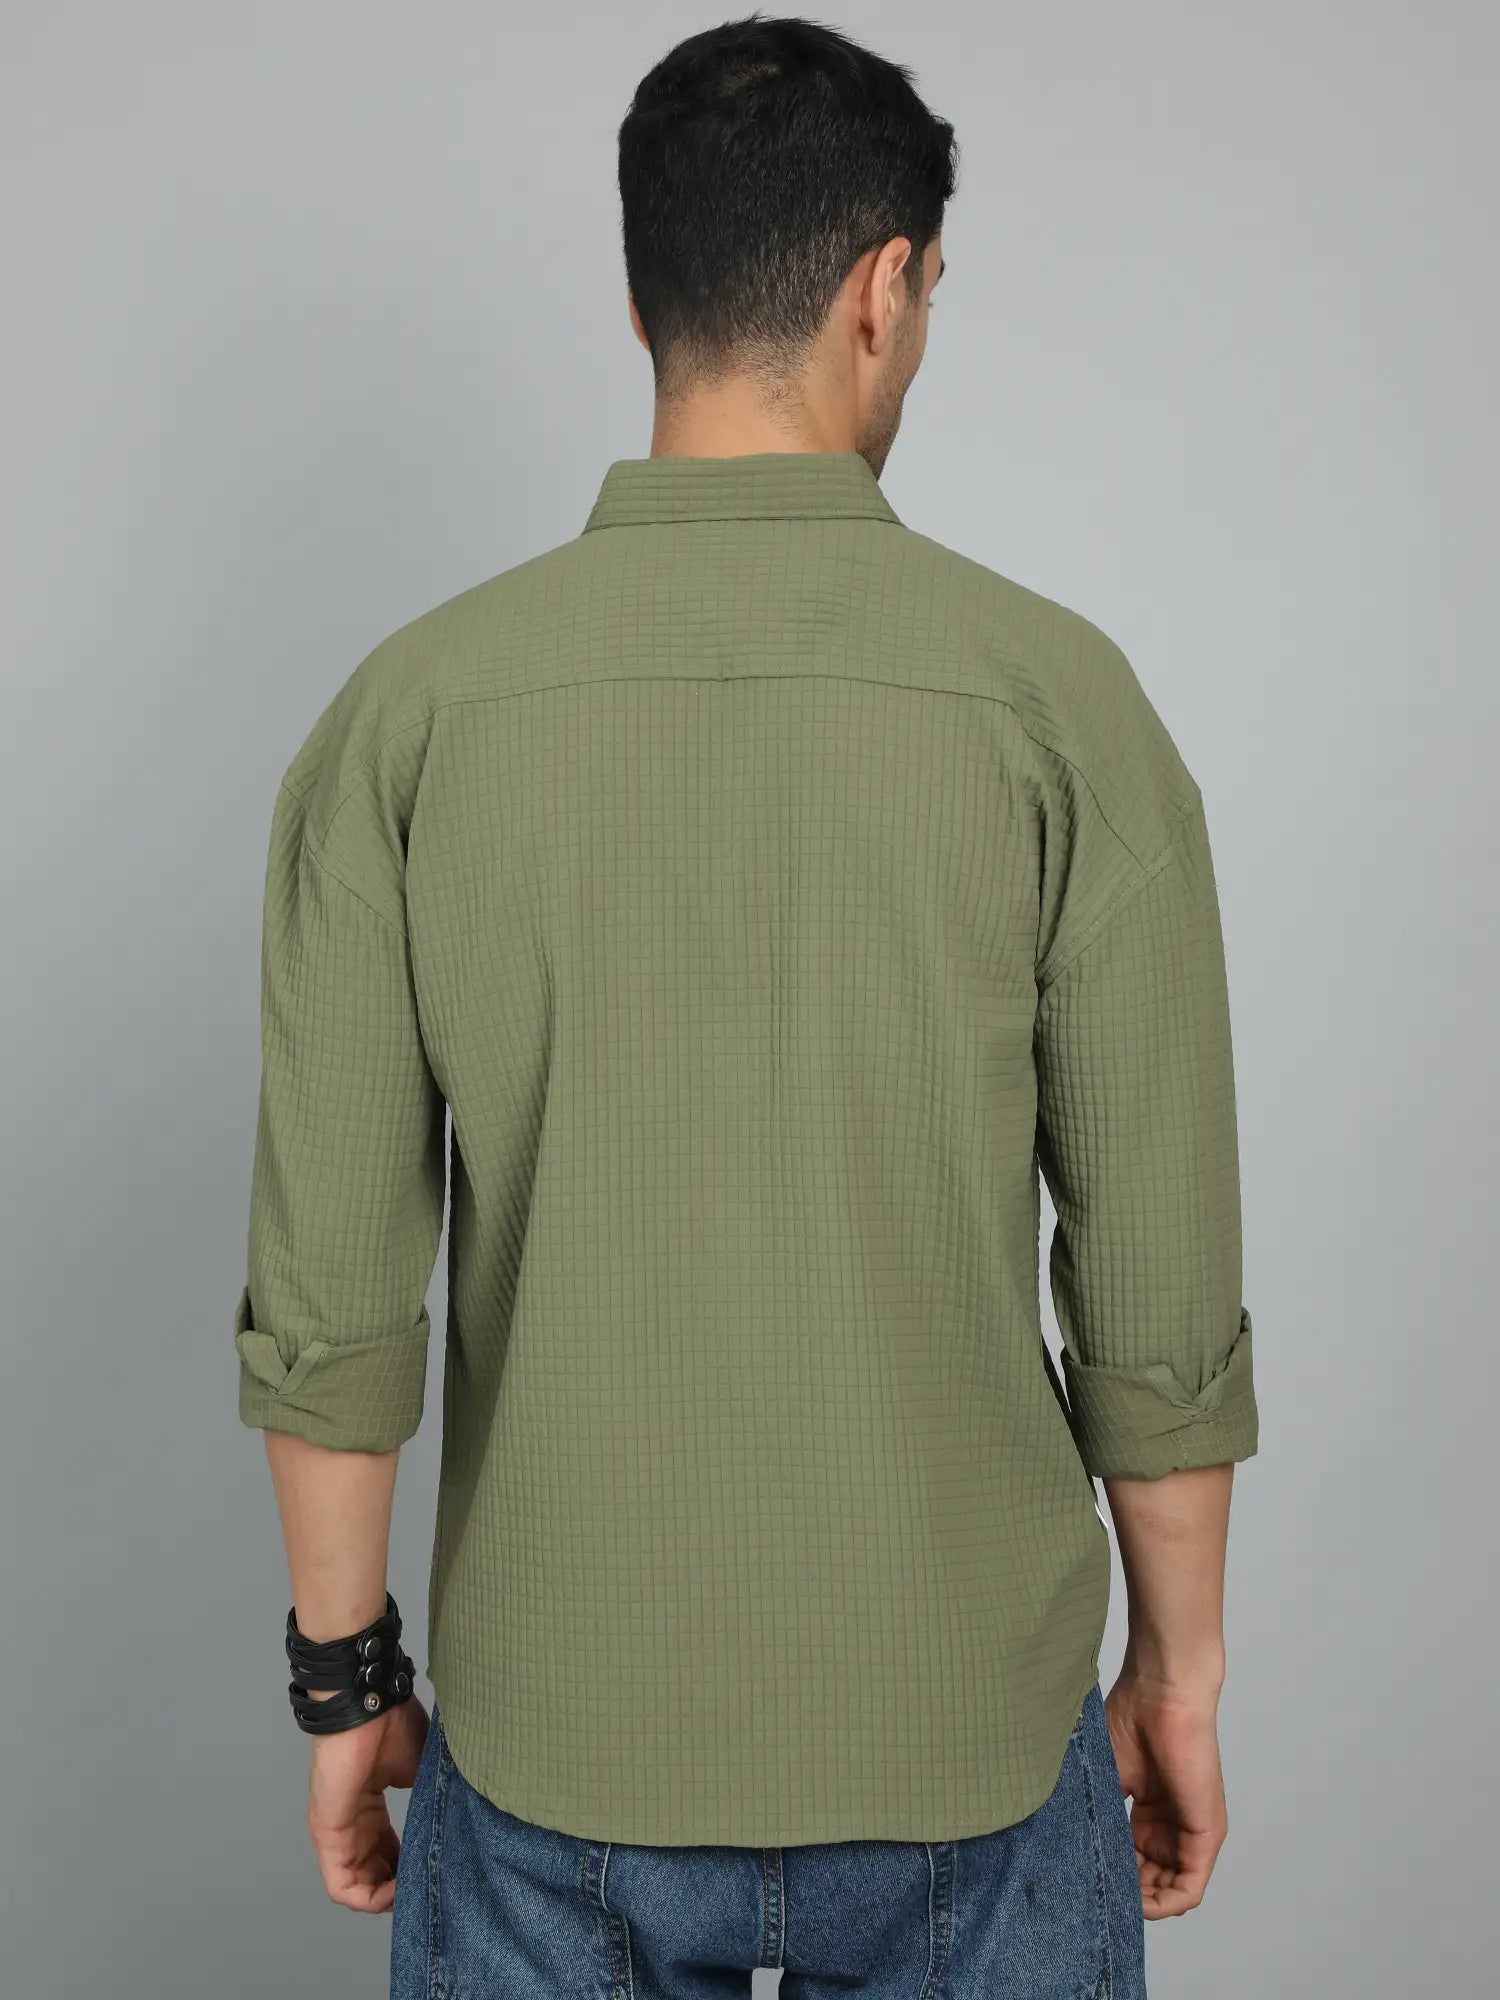 Stylish Sidekick Olive-Green Imported Drop Shoulder Shirt for Men 